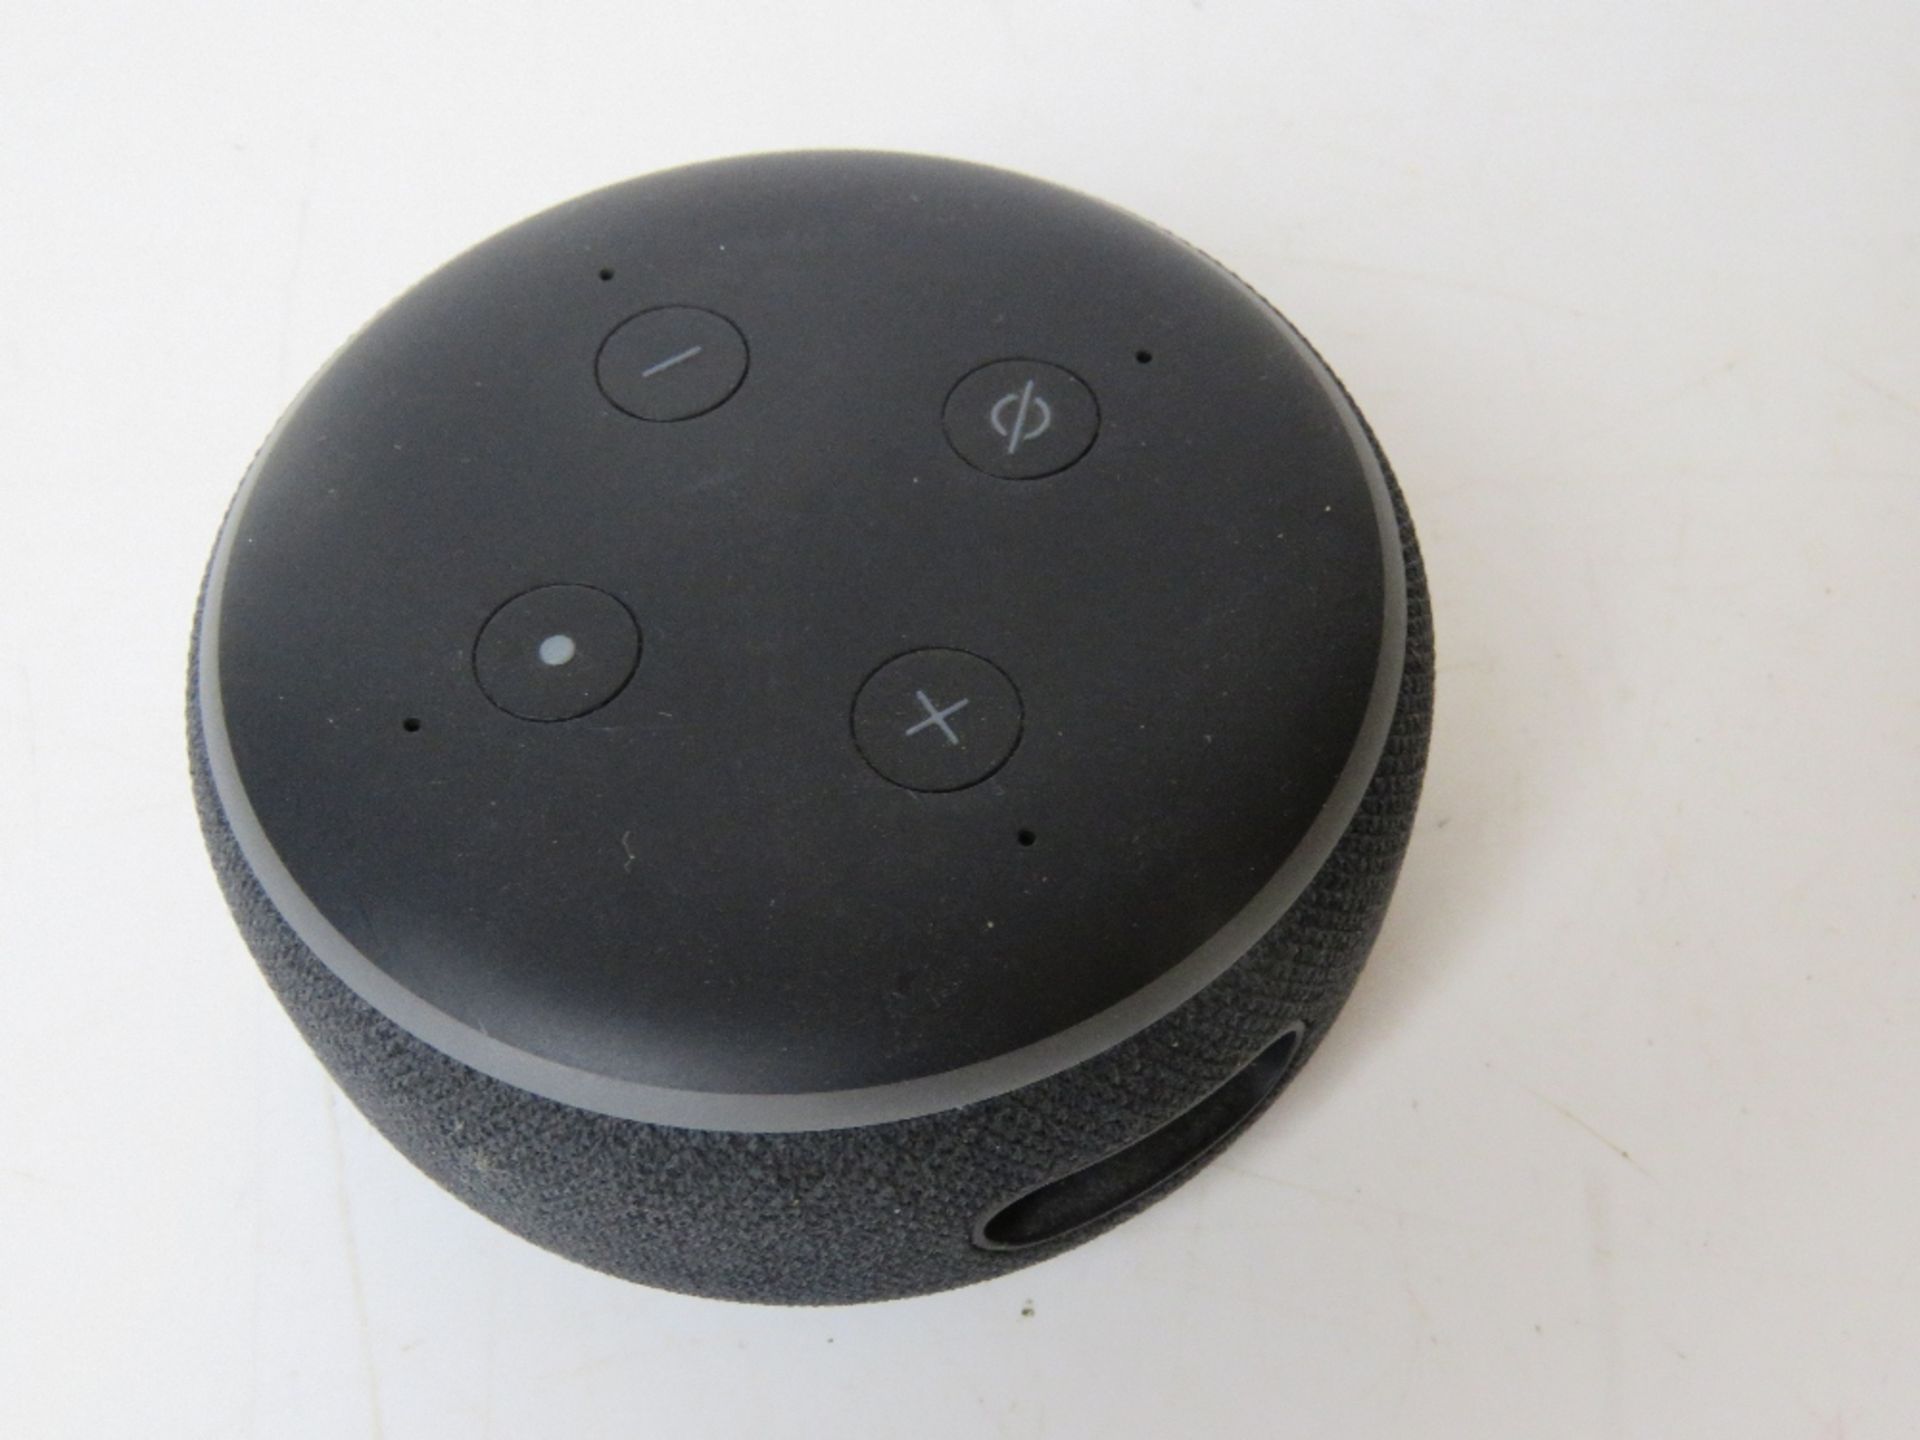 An Amazon Echo Dot, no cable.